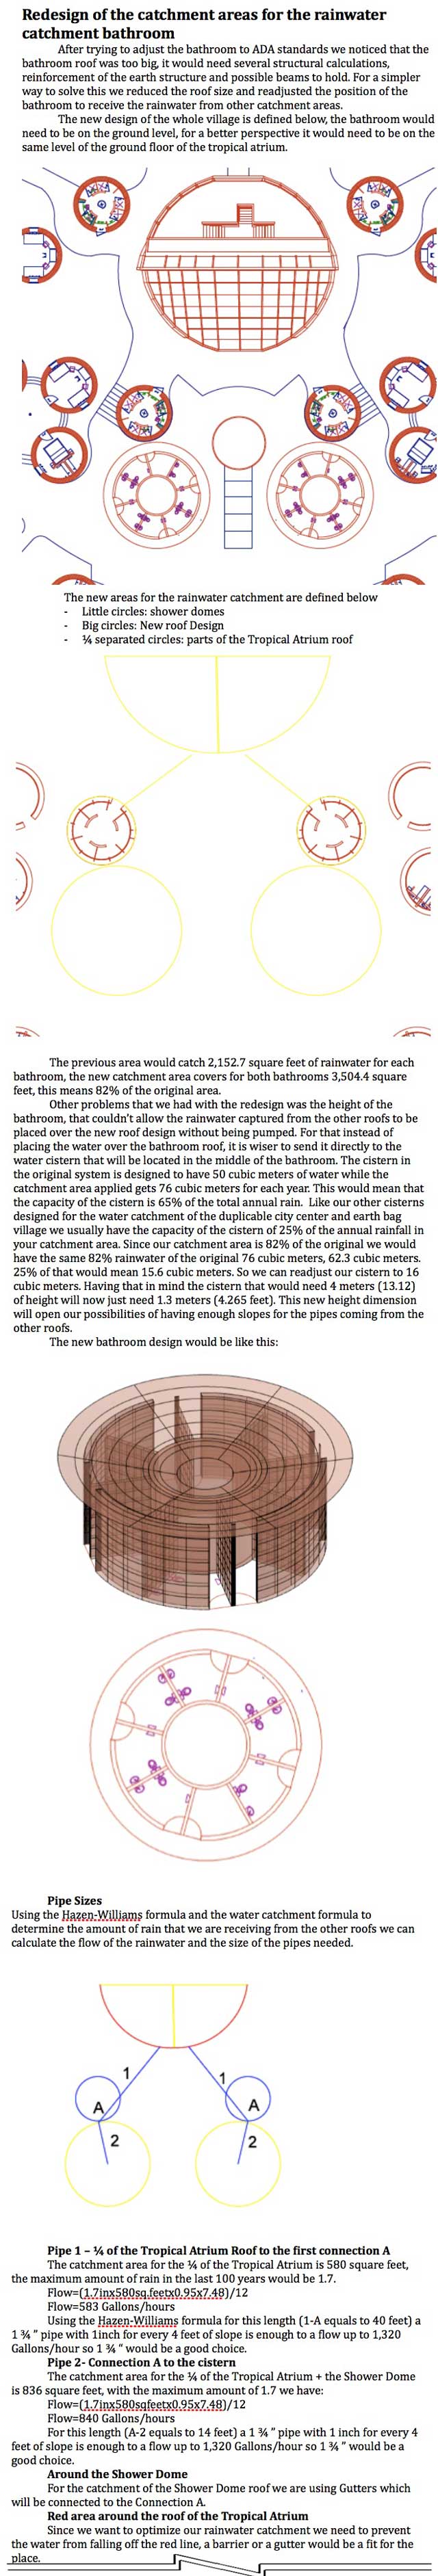 Pragmatic Utopia Creation, water catchment net-zero toilet domes redesign, One Community